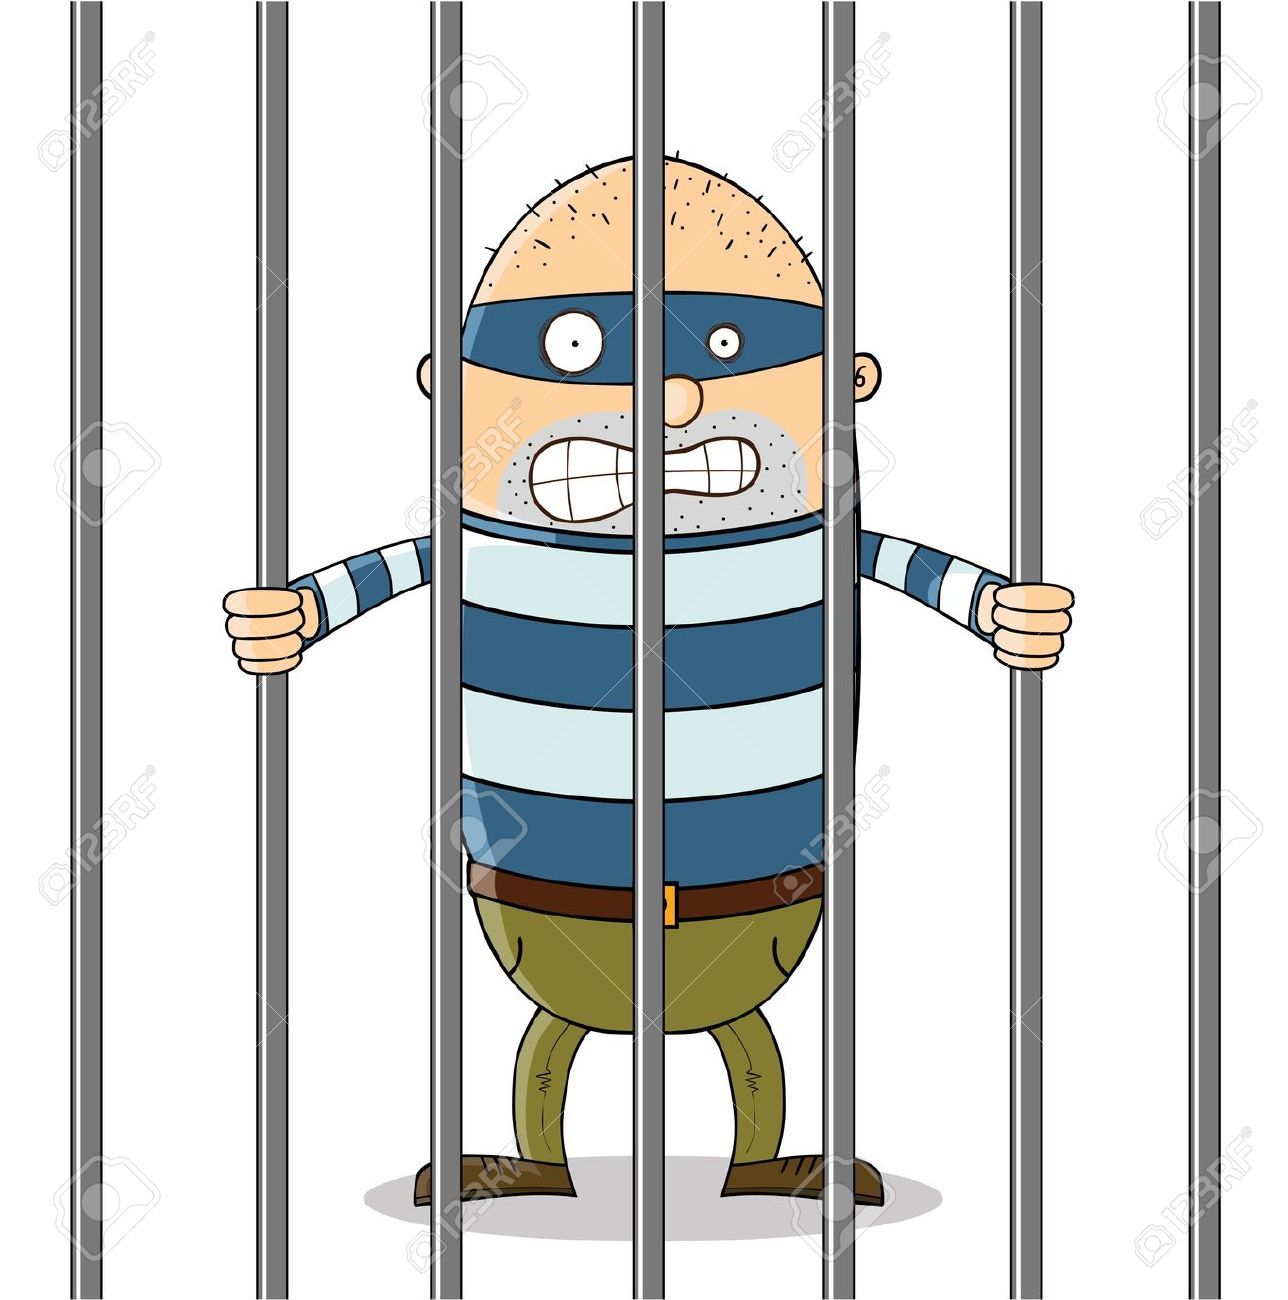 Bad clipart criminal. Jail cartoon clip art